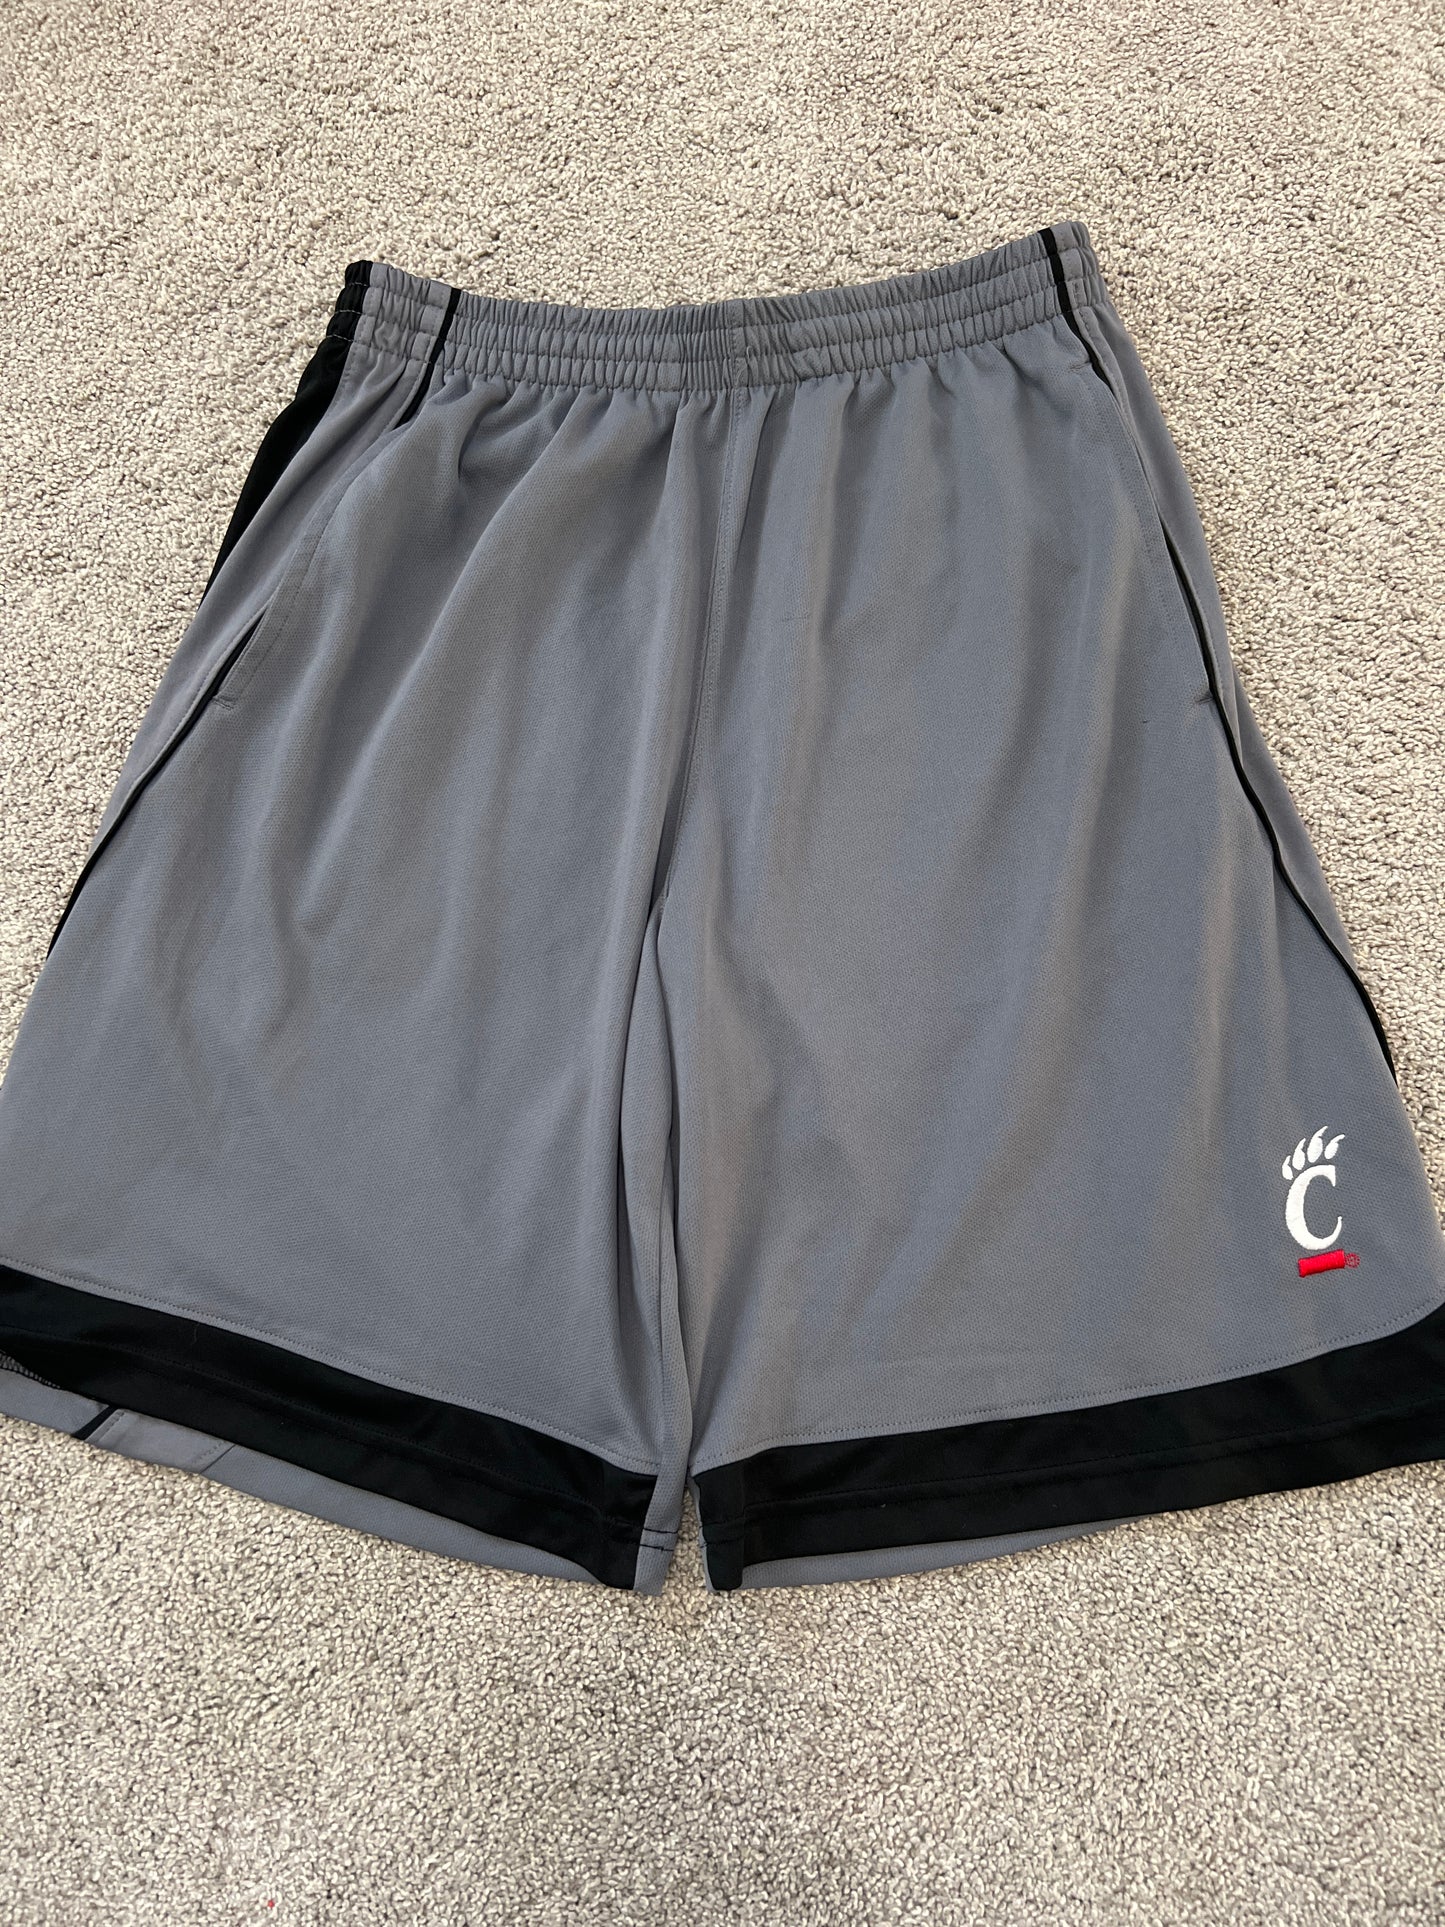 Men’s UC Bearcats Athletic Shorts M